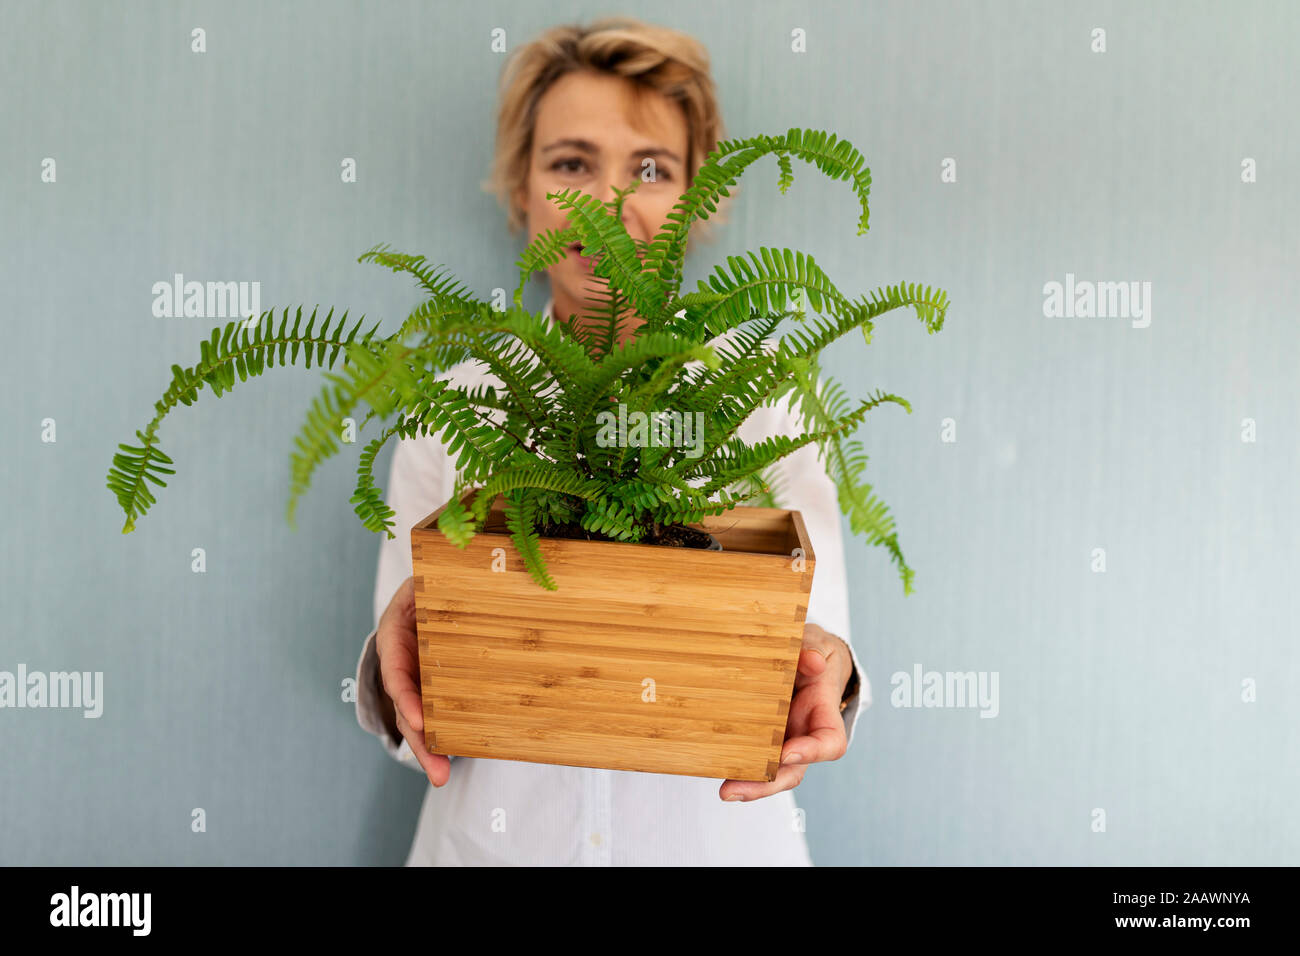 Reife Frau stehend an der Wand mit einem Farn Pflanze Stockfoto